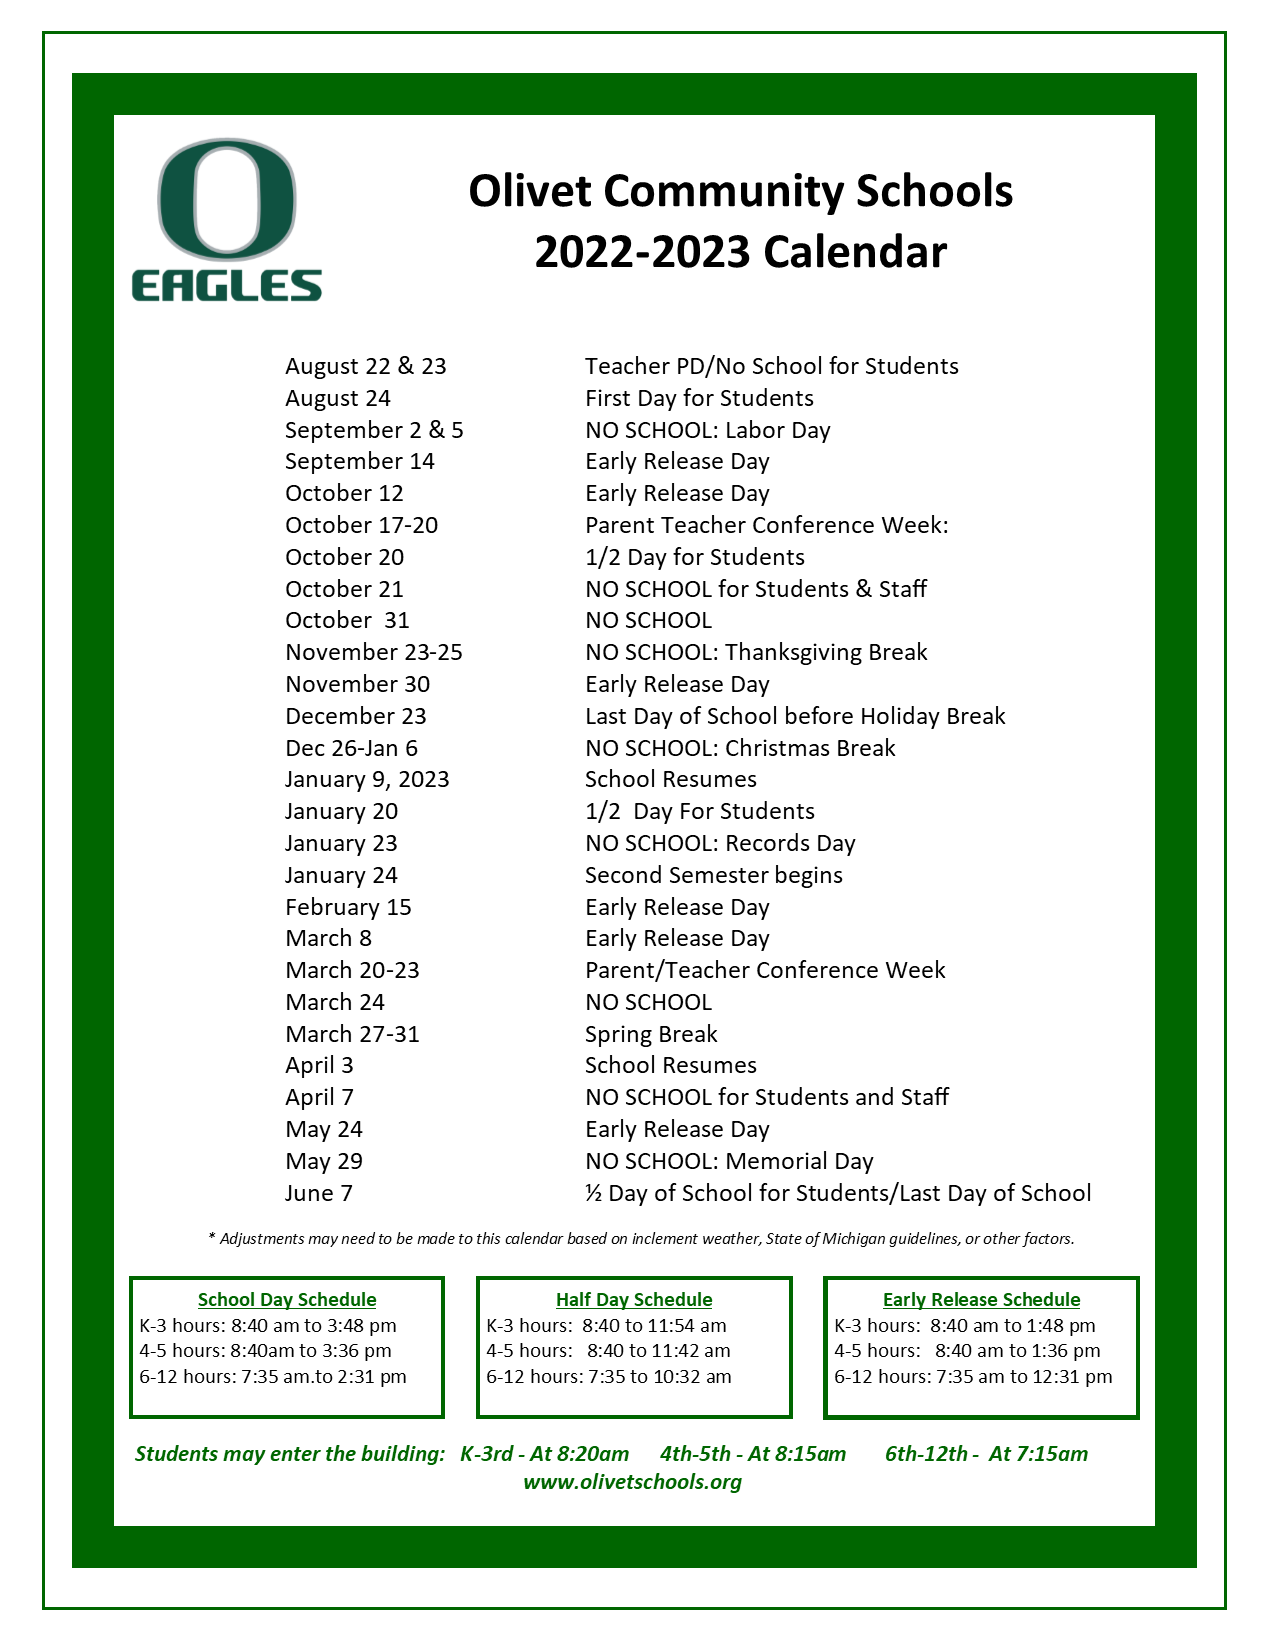 22-23 School Calendar